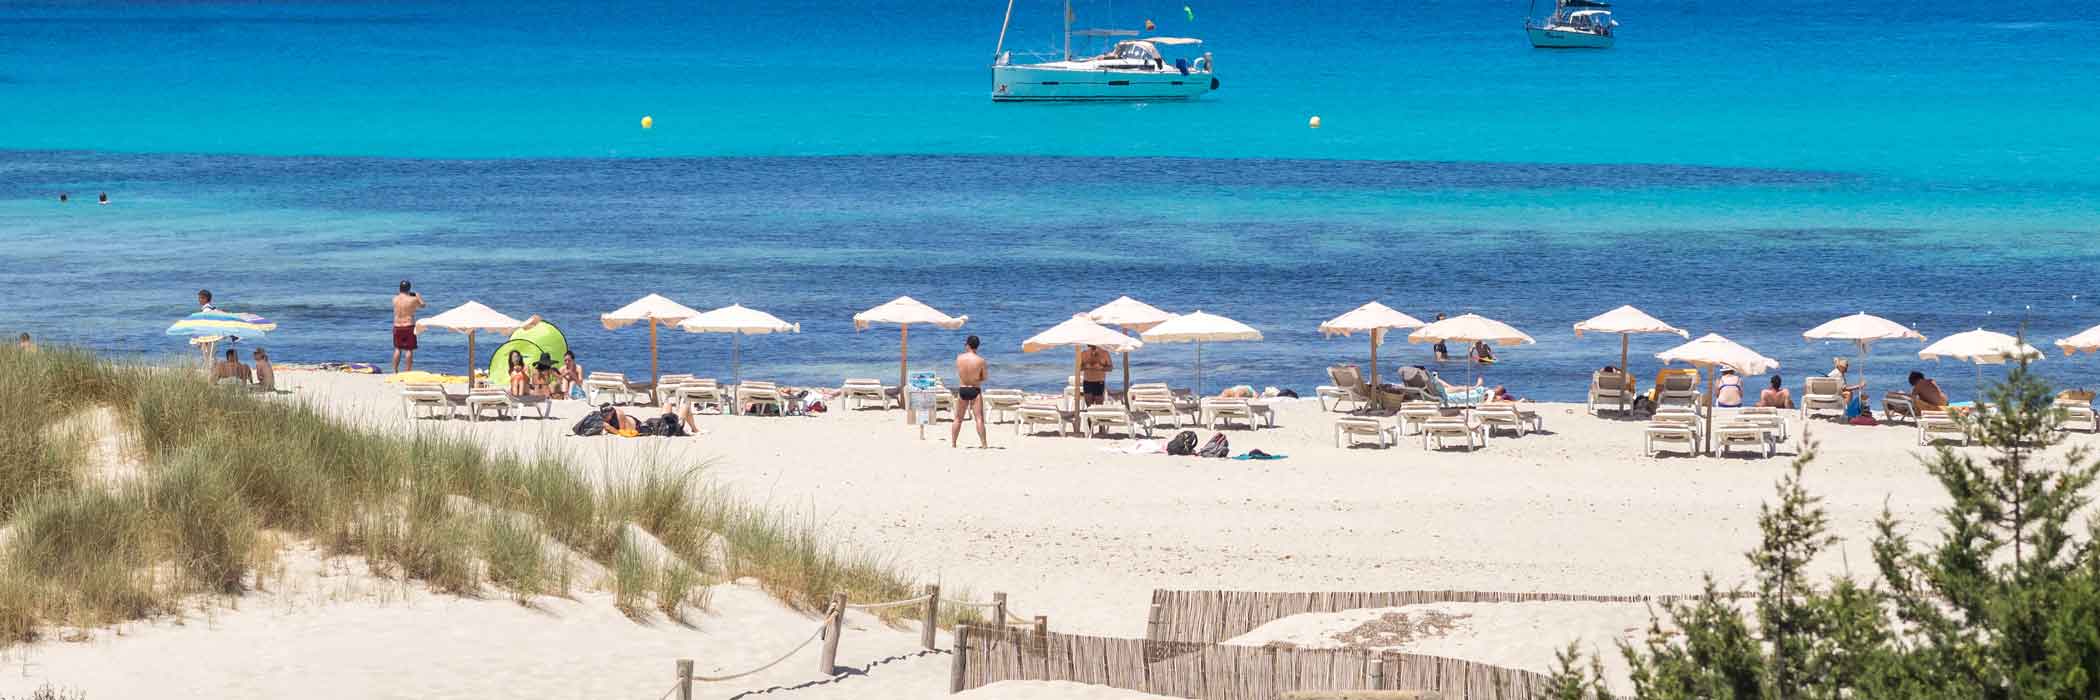 Cheap Holidays To Formentera